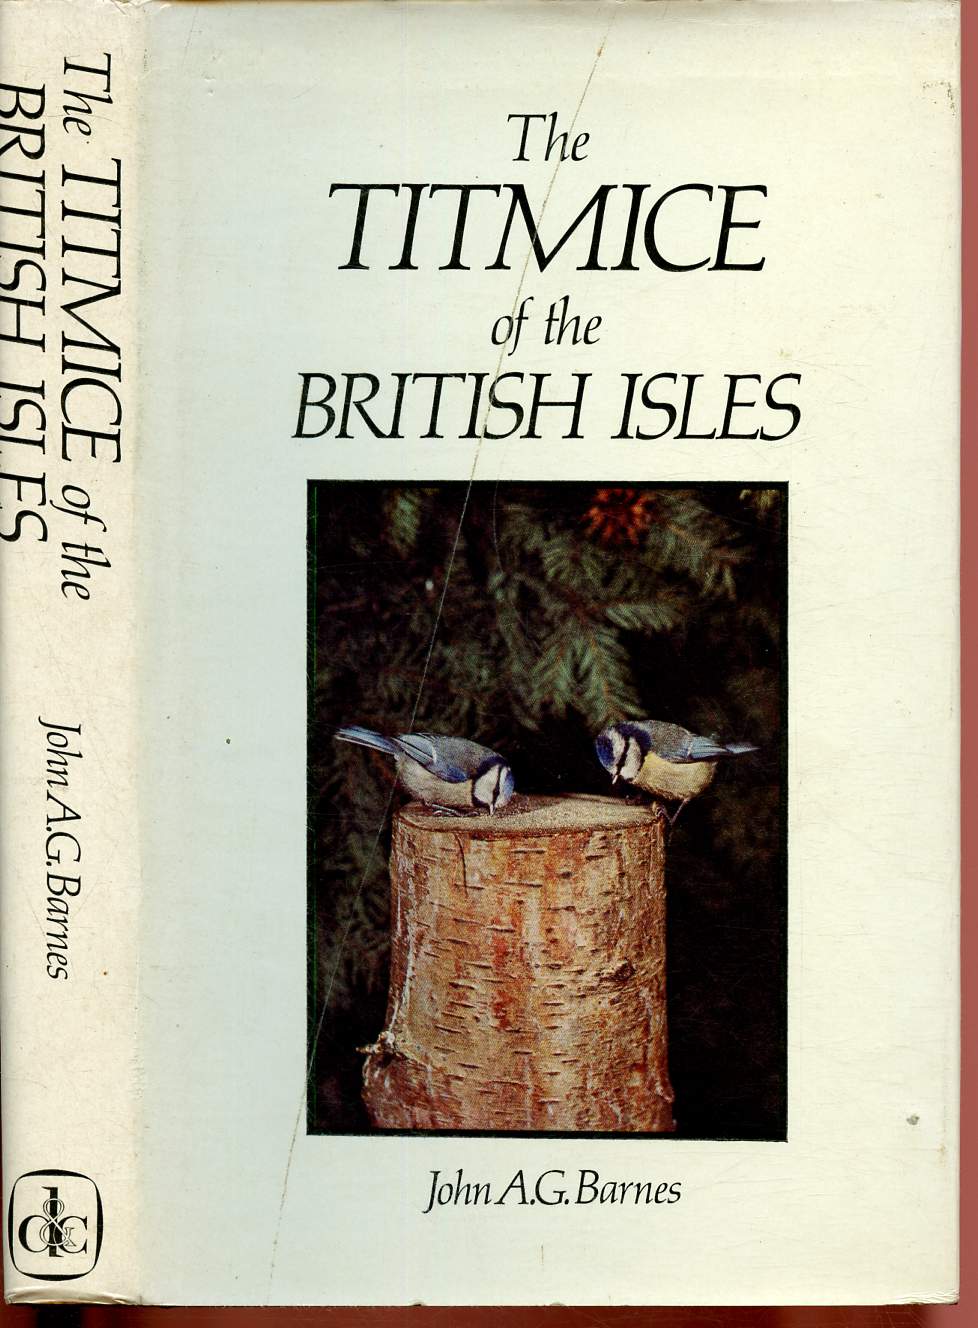 The titmice of the Bitish Isles